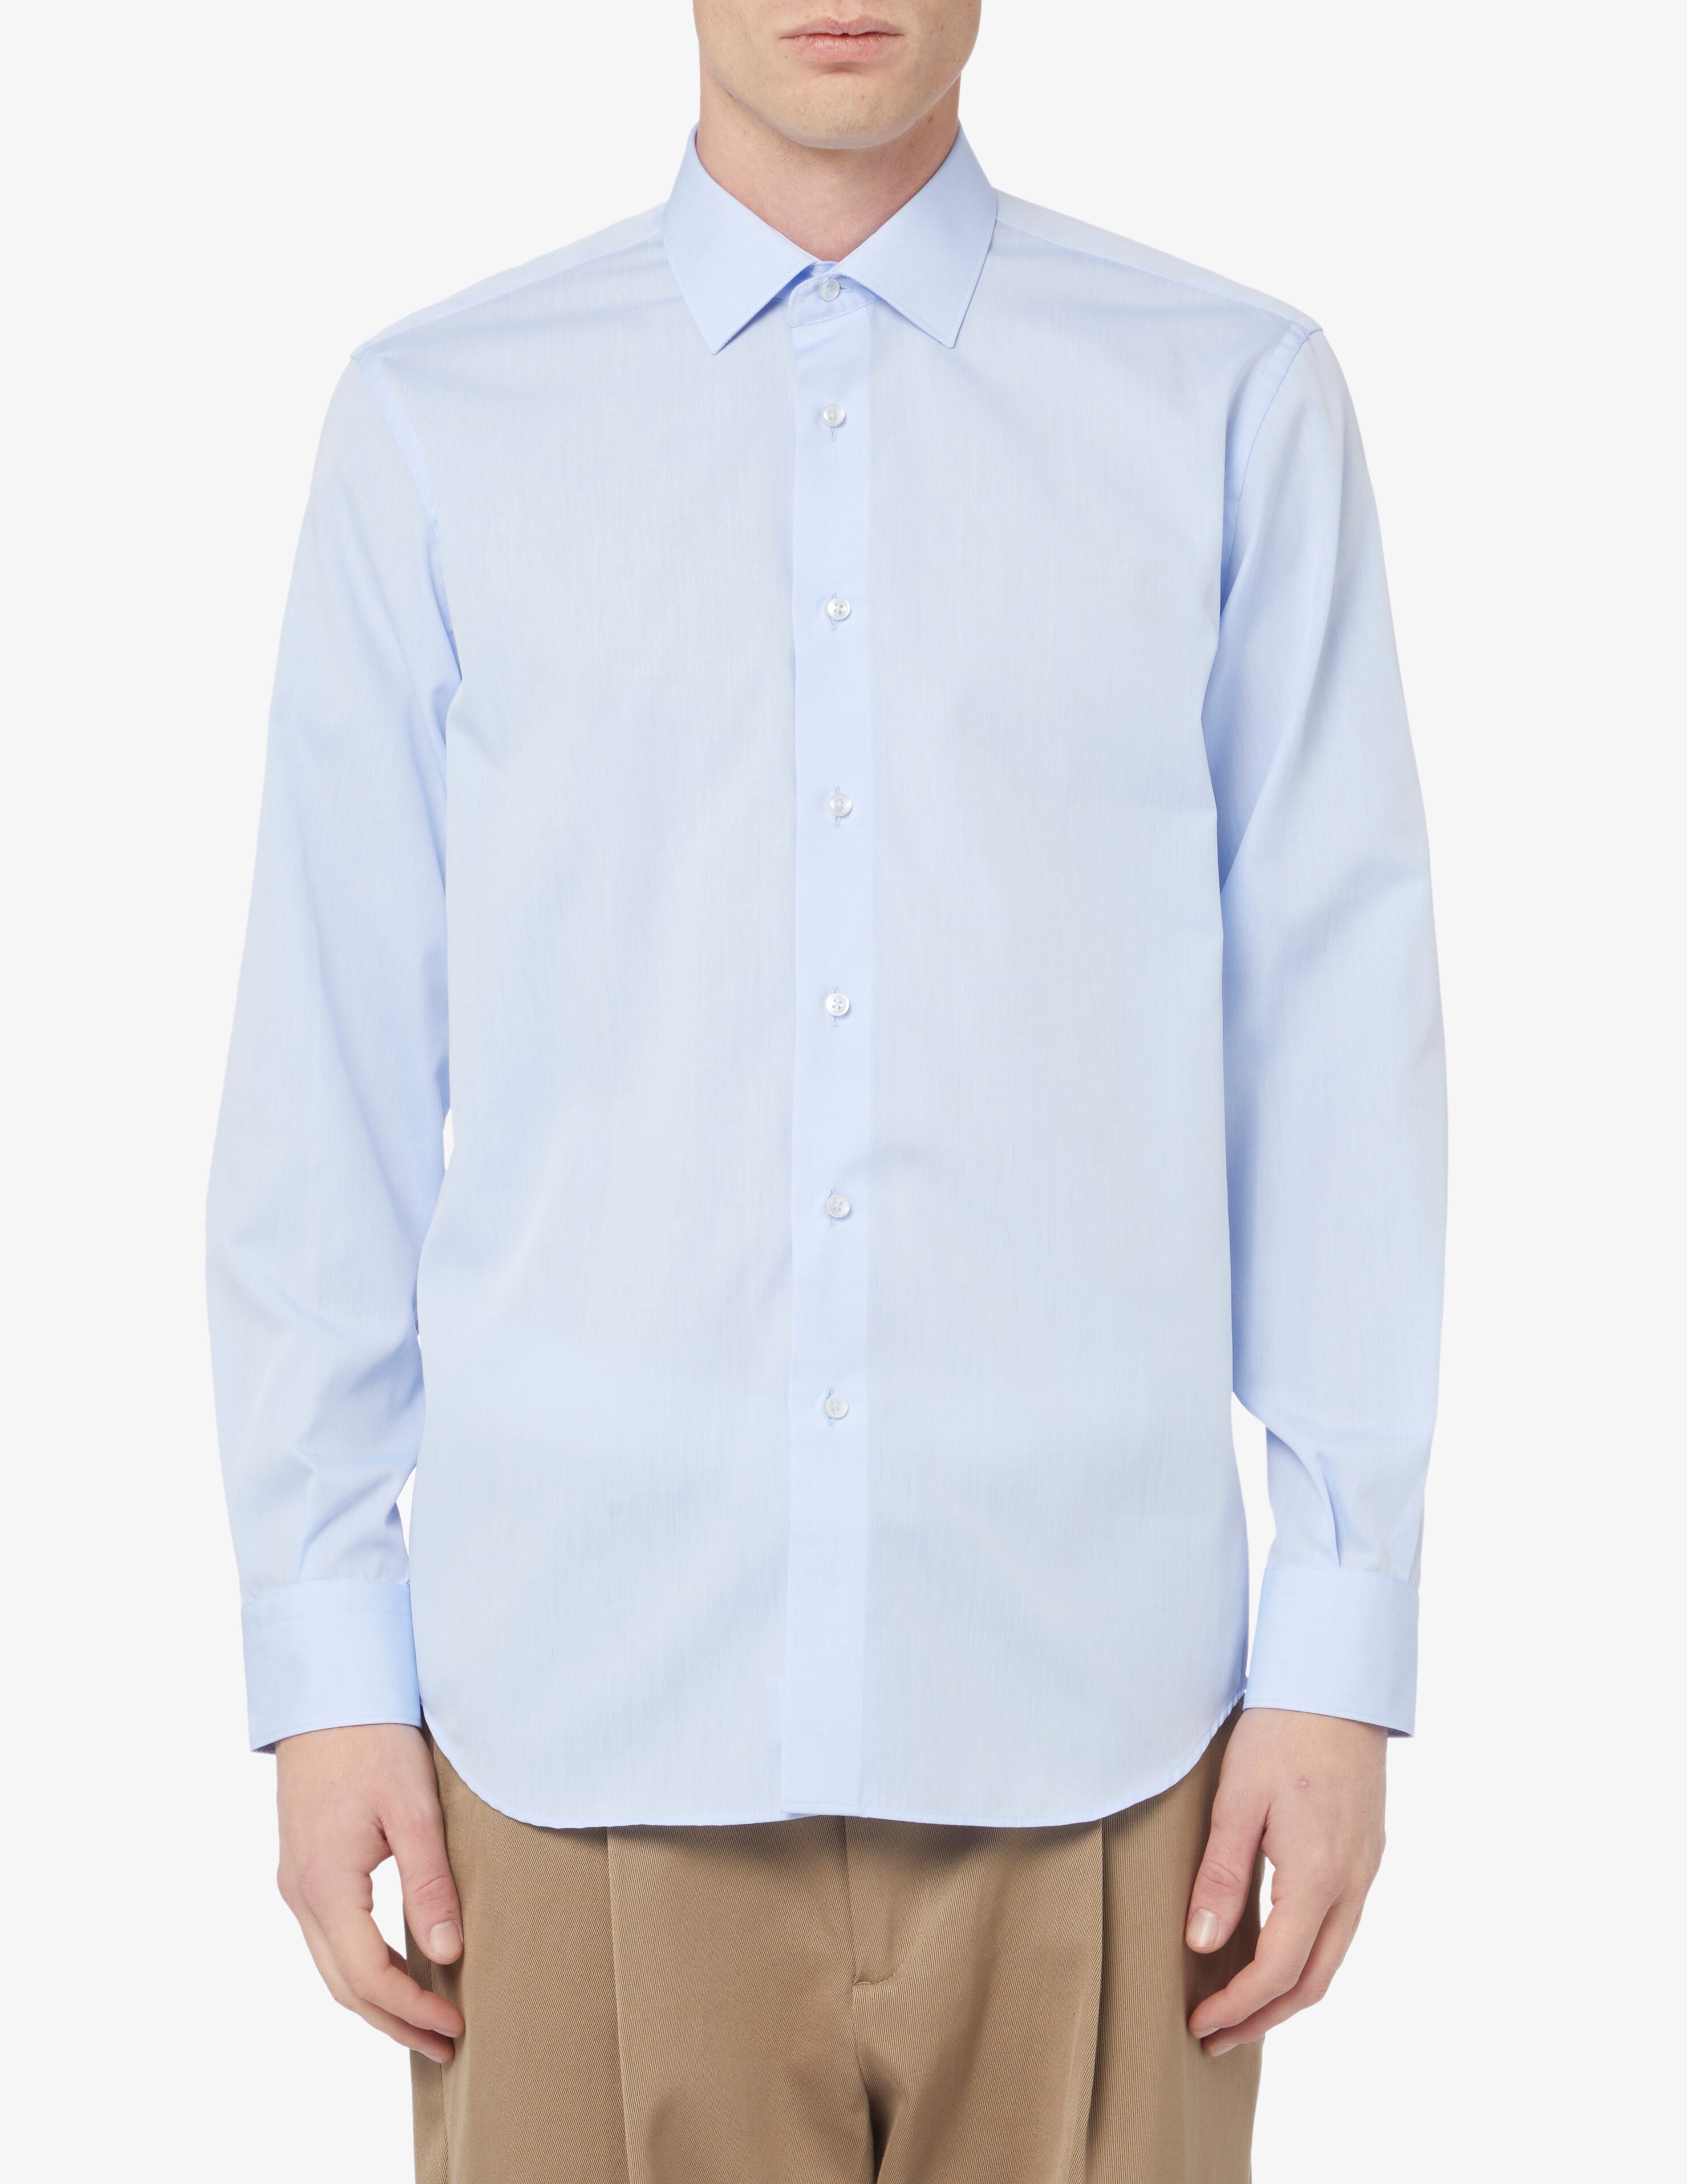 Рубашка обычная зефир без утюга Sartoria Italiana, светло-синий